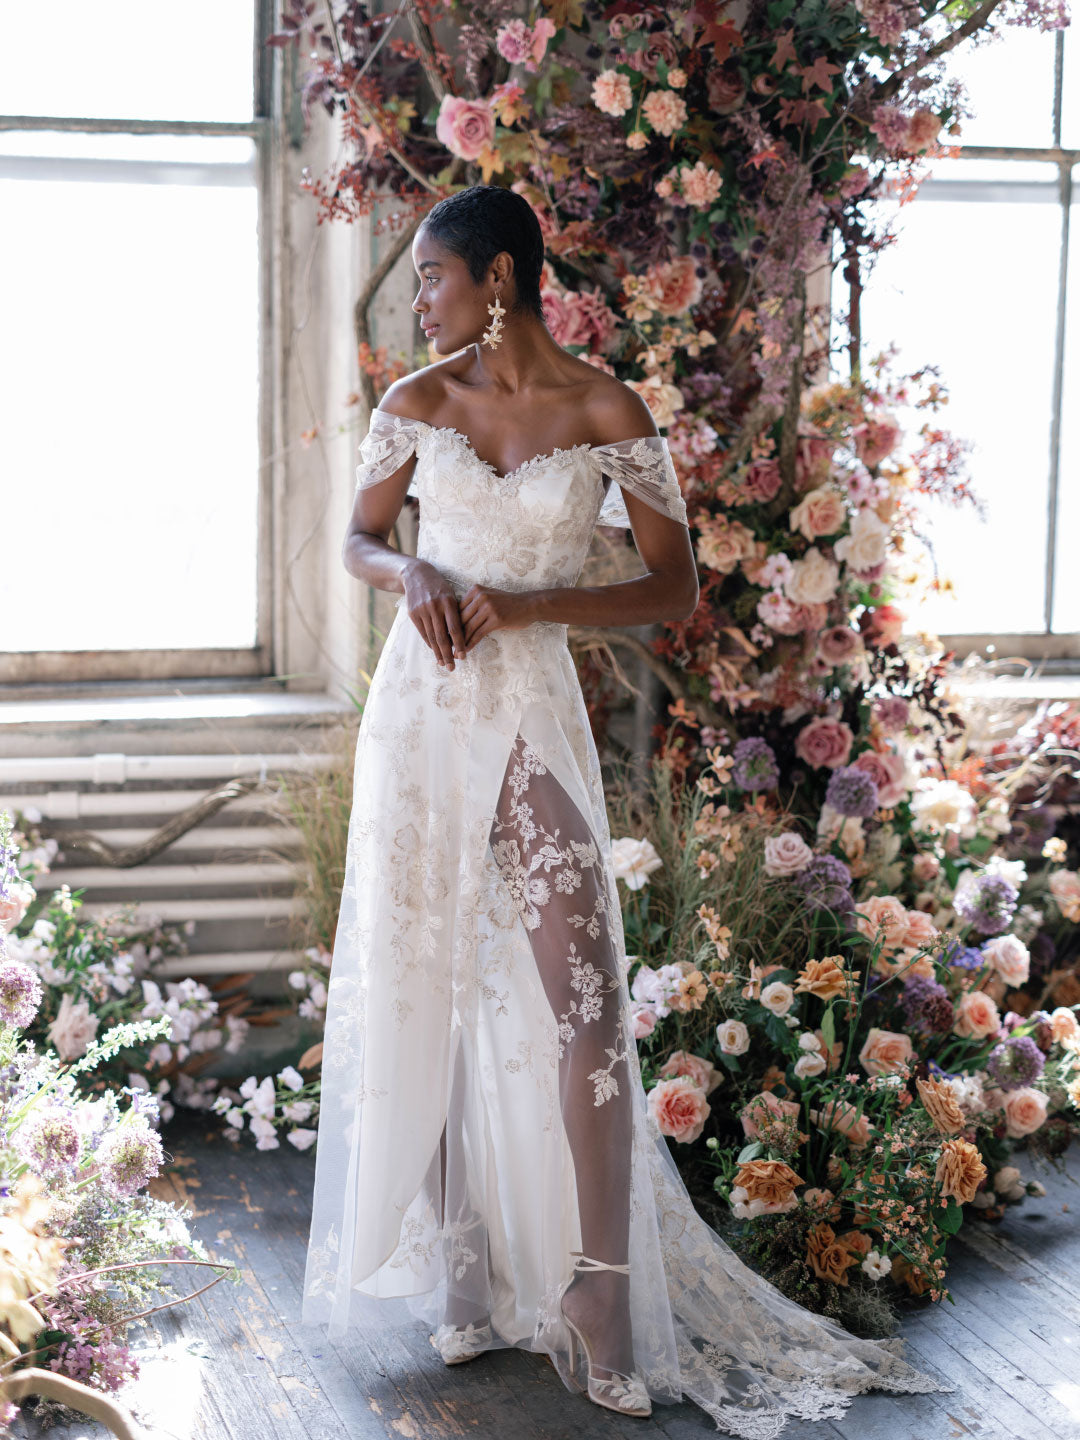 Morganite Claire Pettibone Adorned Couture Wedding Dress Collection